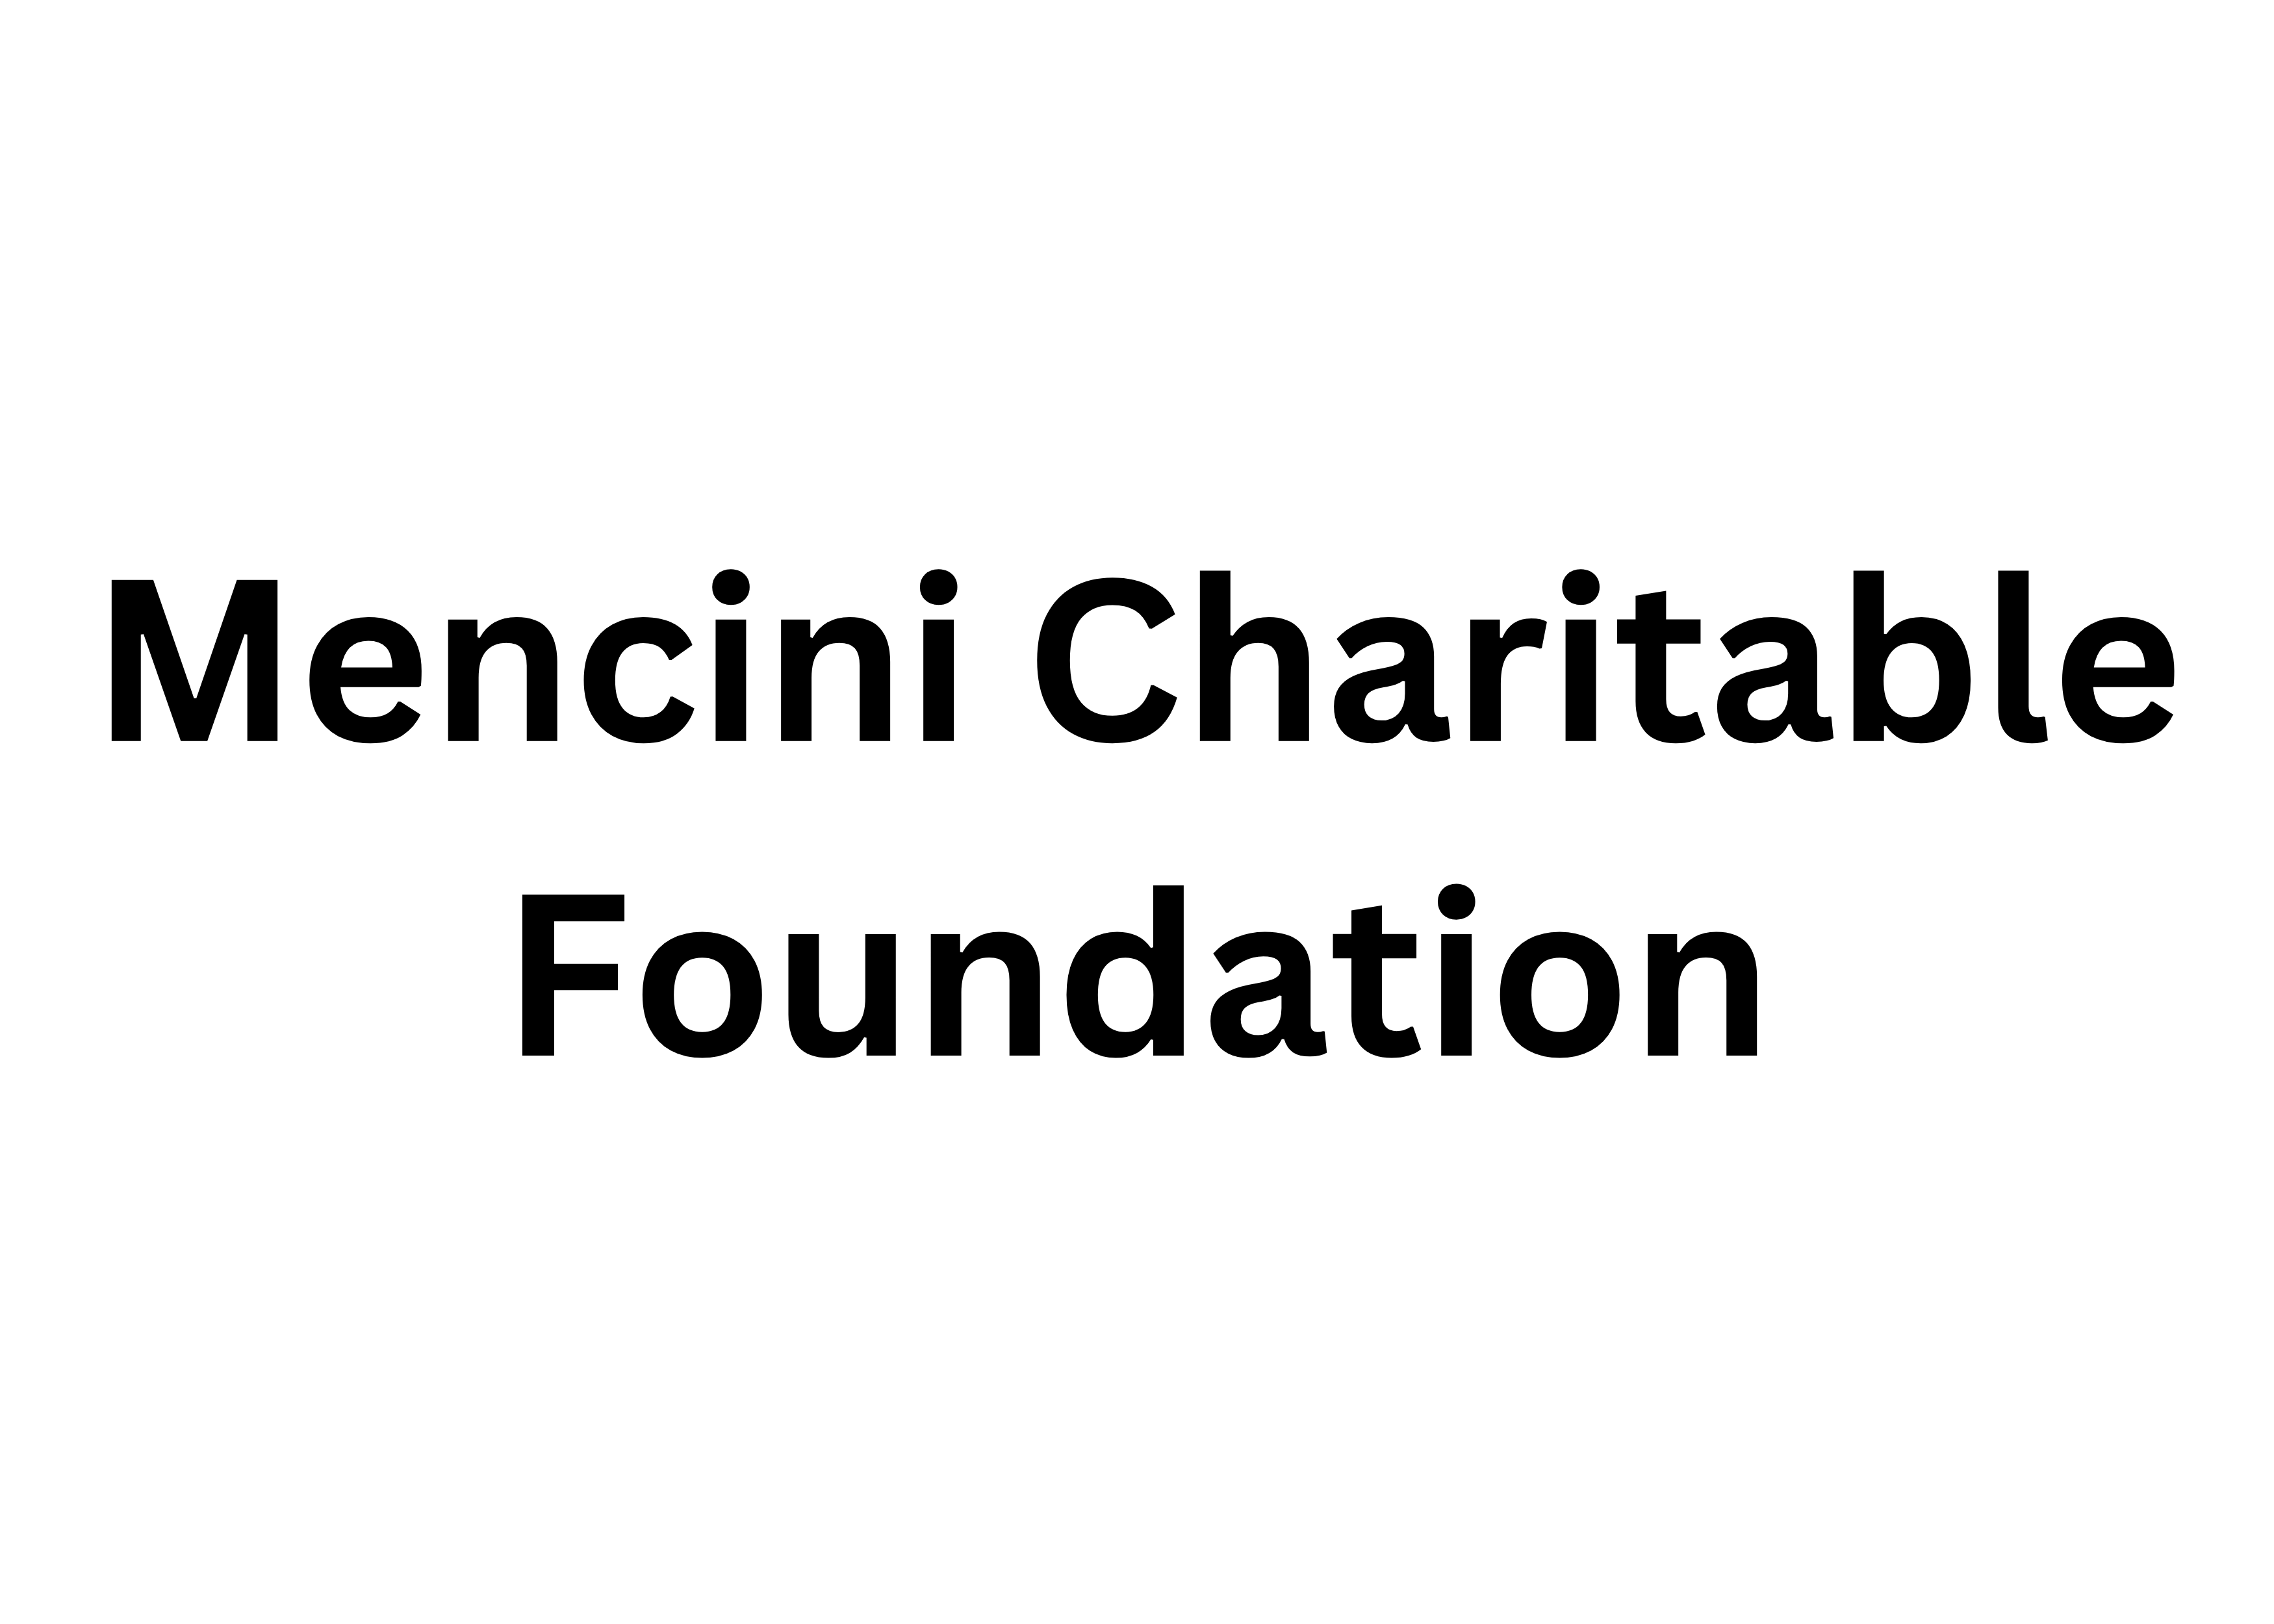 Mencini Charitable Foundation